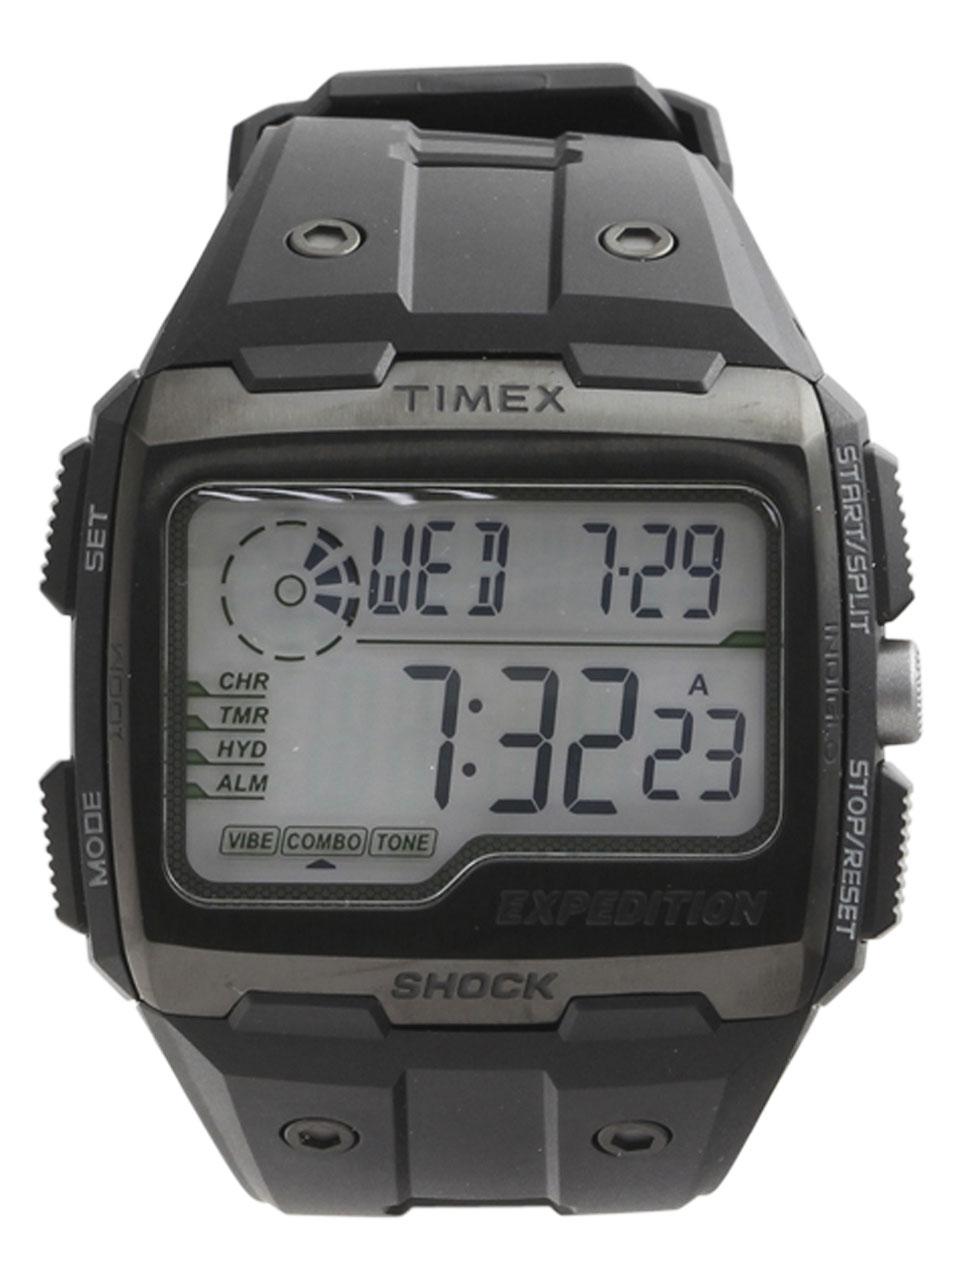 Timex Men's TW4B02500 Expedition Grid Shock Black Digital Watch